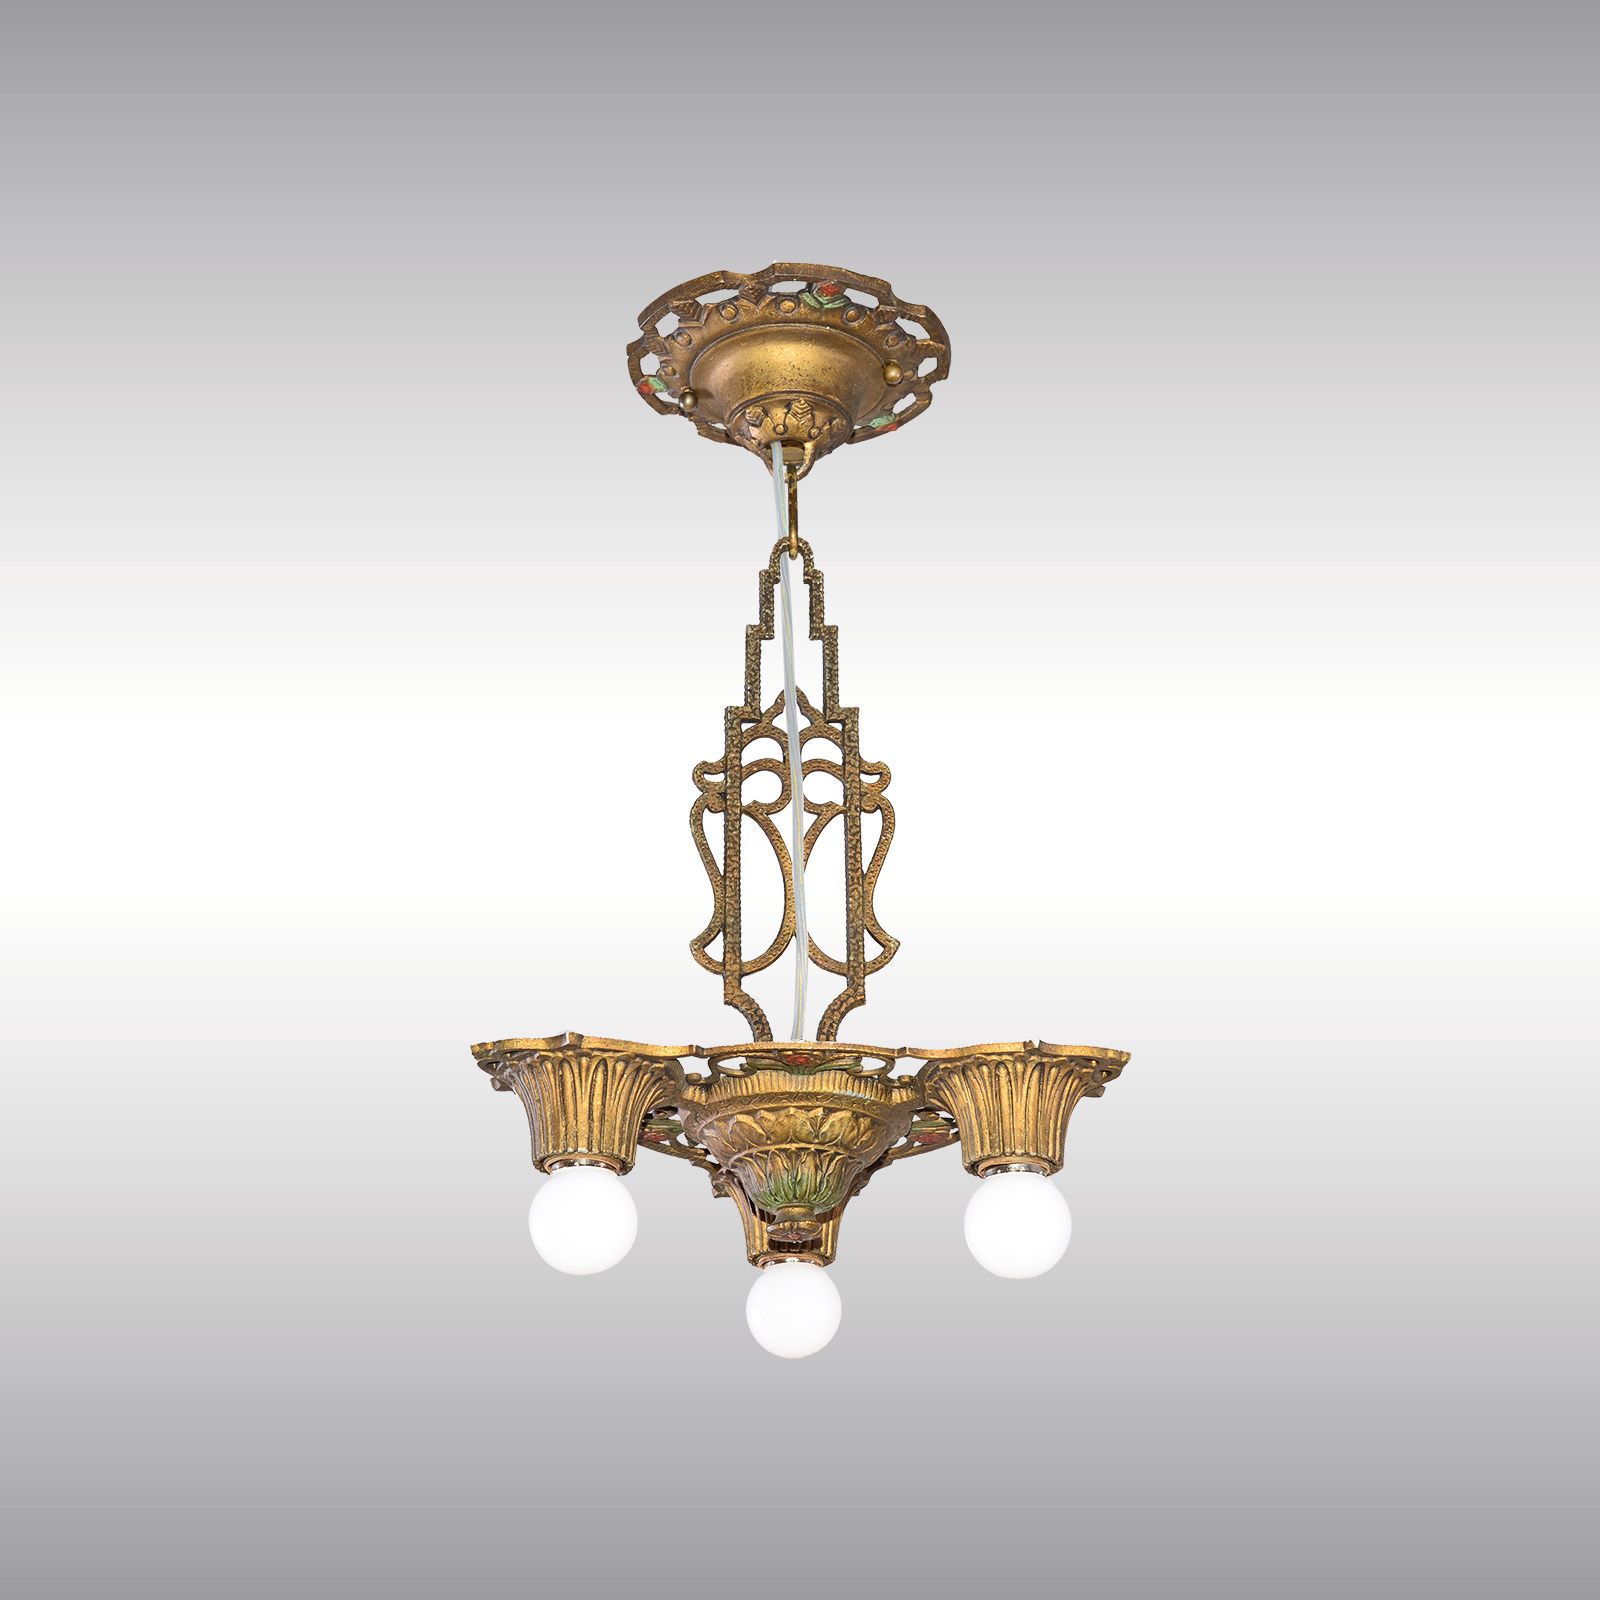 WOKA LAMPS VIENNA - OrderNr.: 50057|Art Deco New York Winthrop Series, Virden - Design: ArtDeco